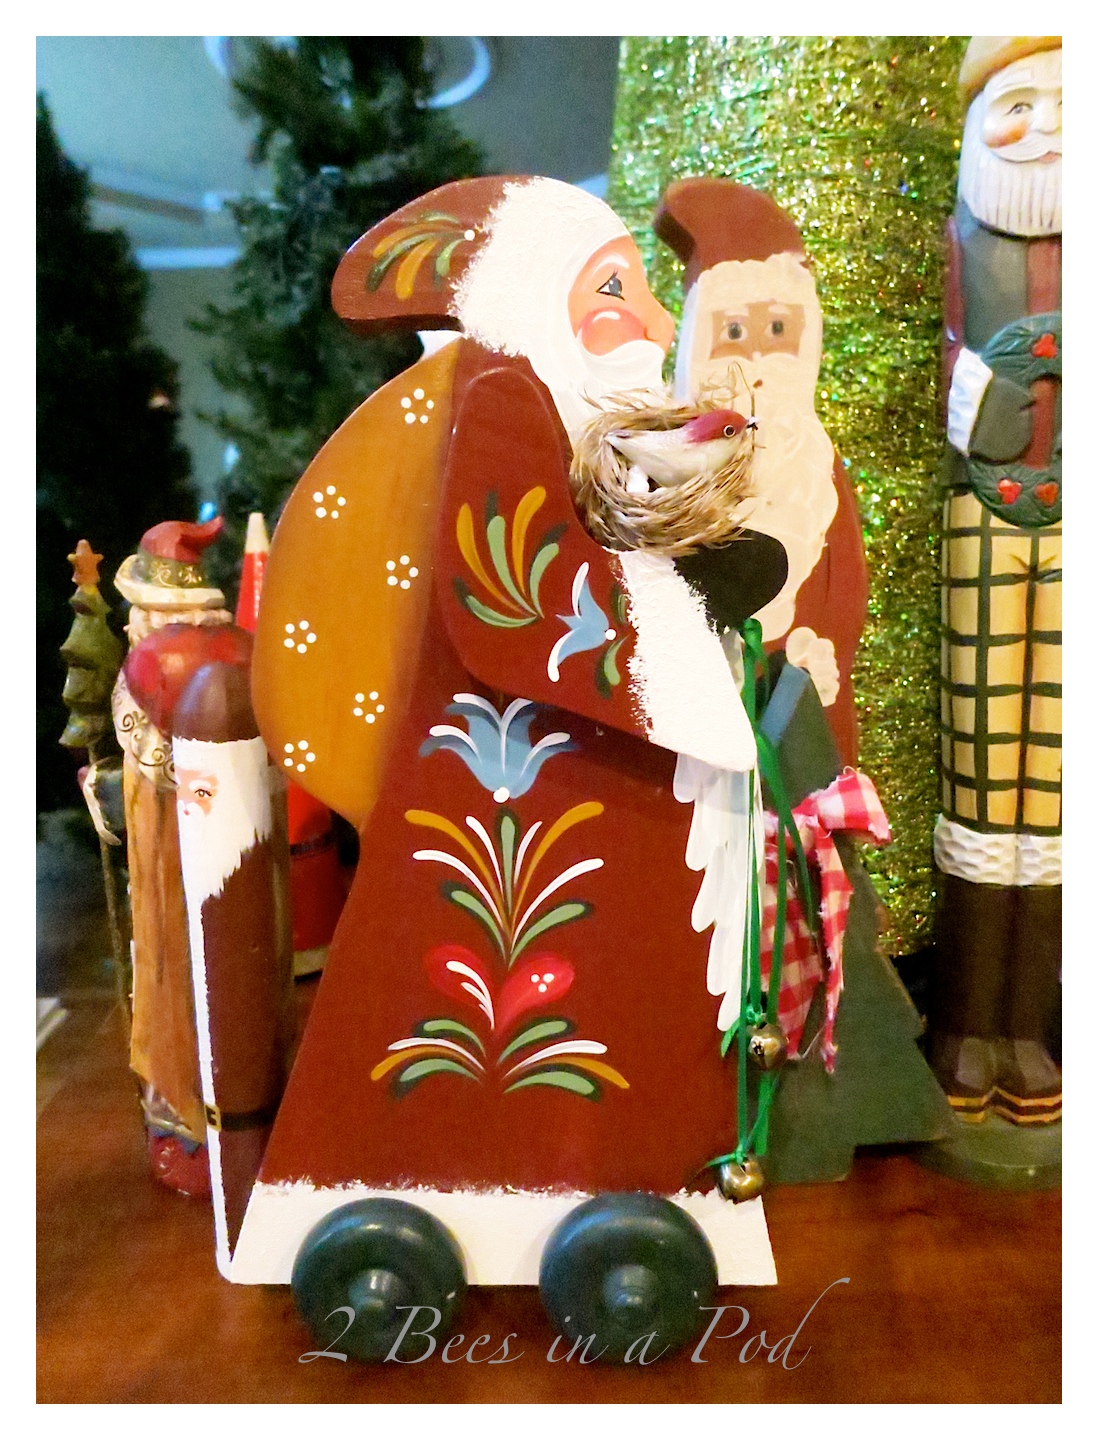 Handmade and painted vintage Santa Claus